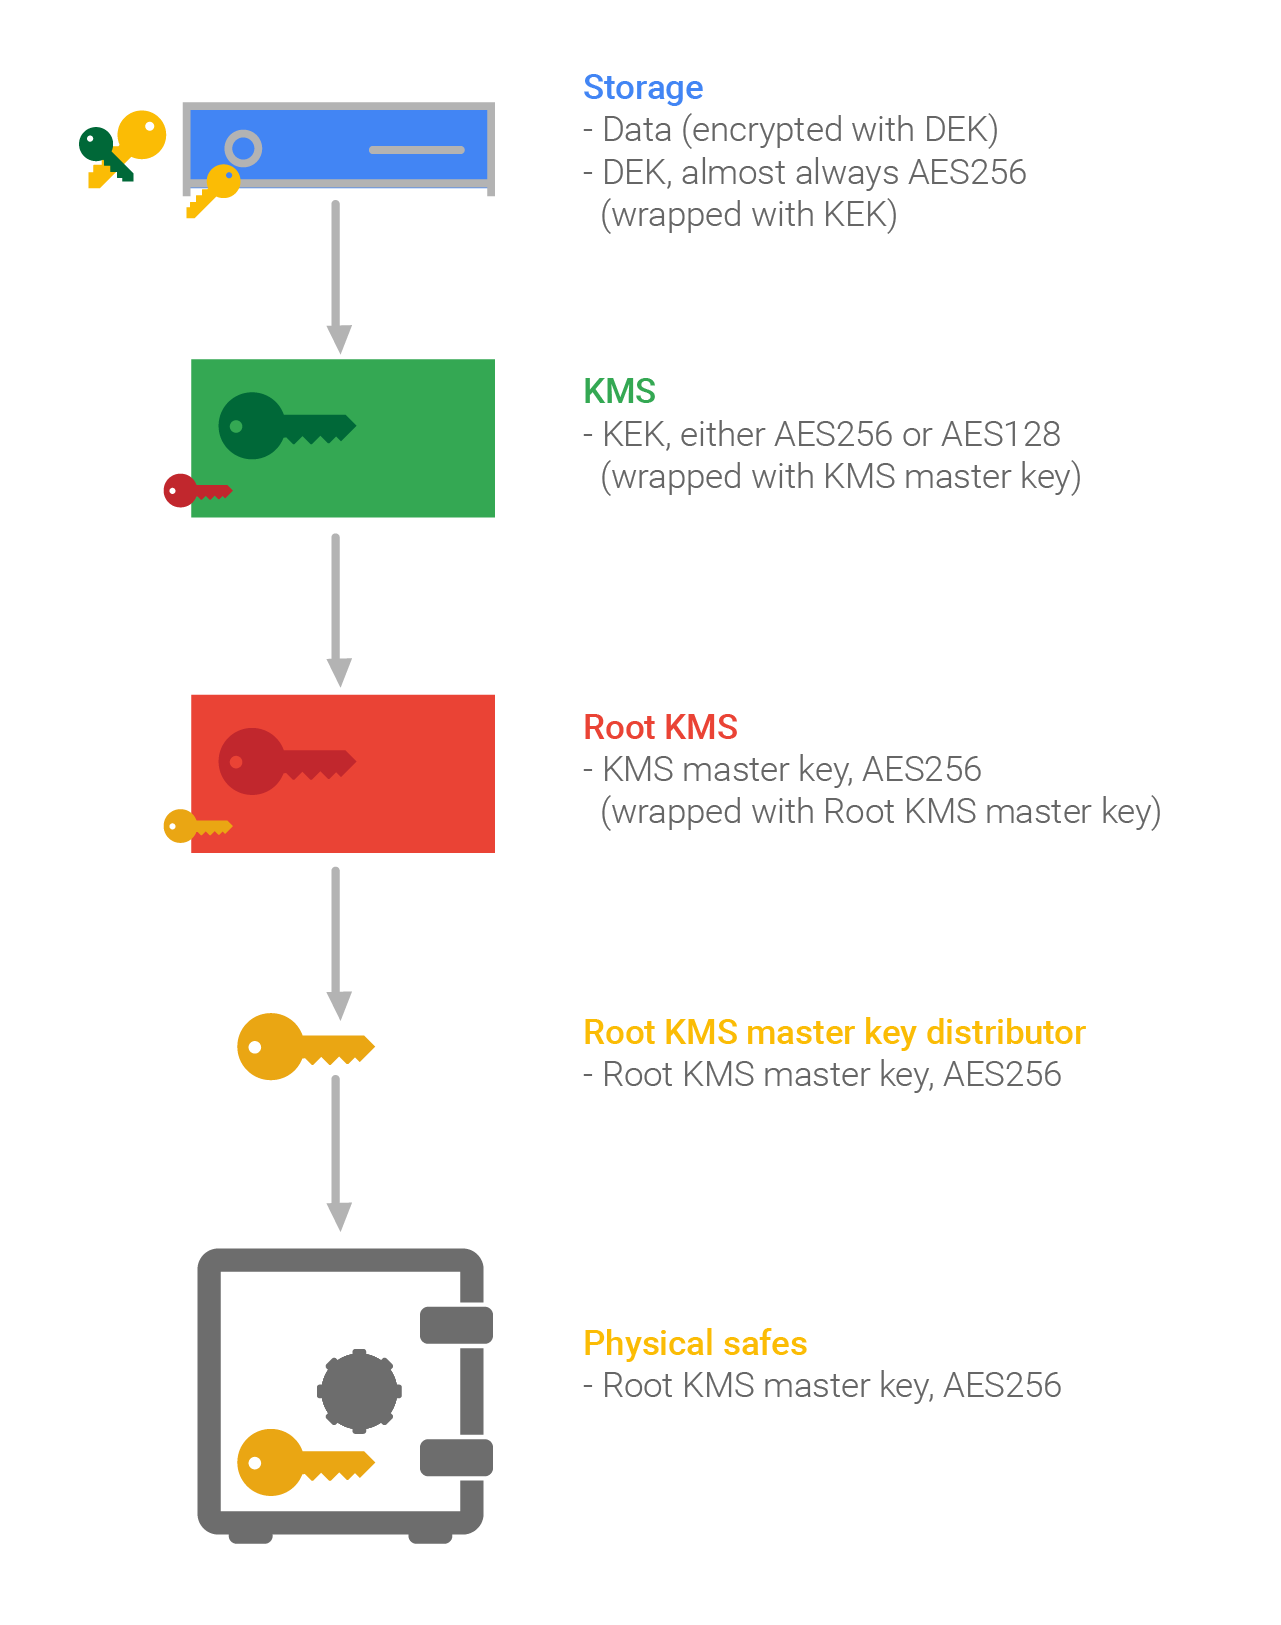 Encryption Key Hierarchy at Google